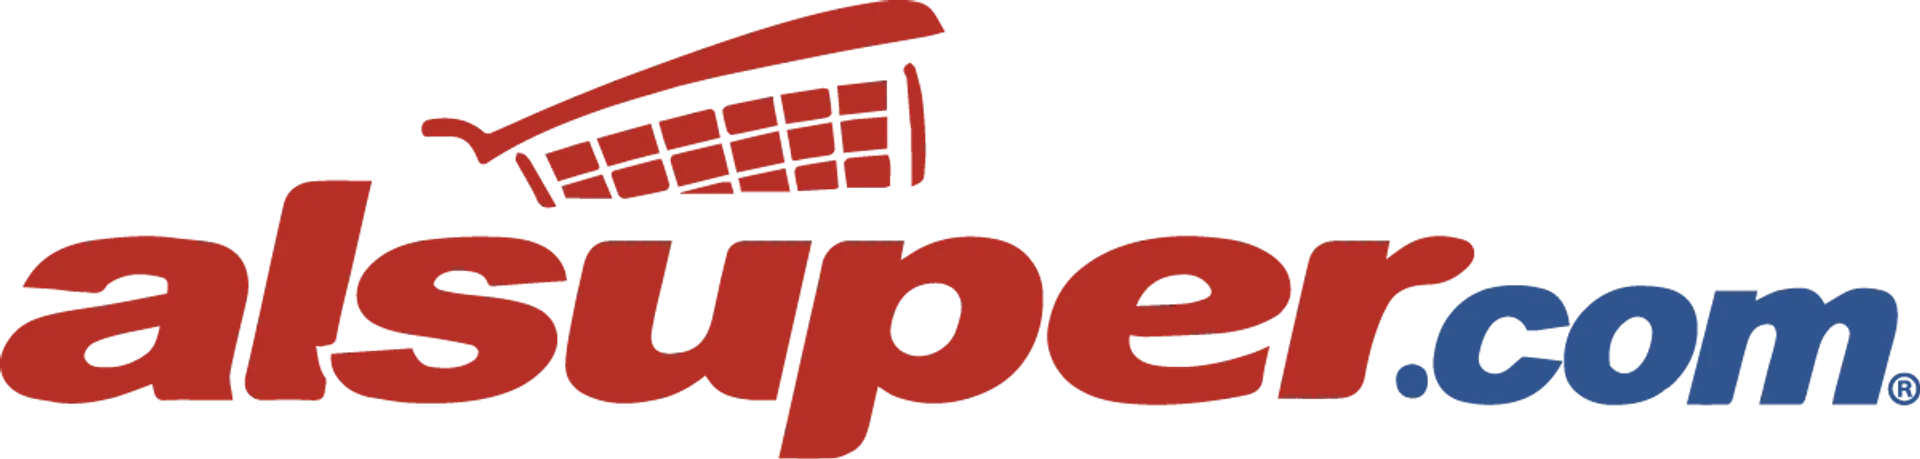 ALSUPER logo